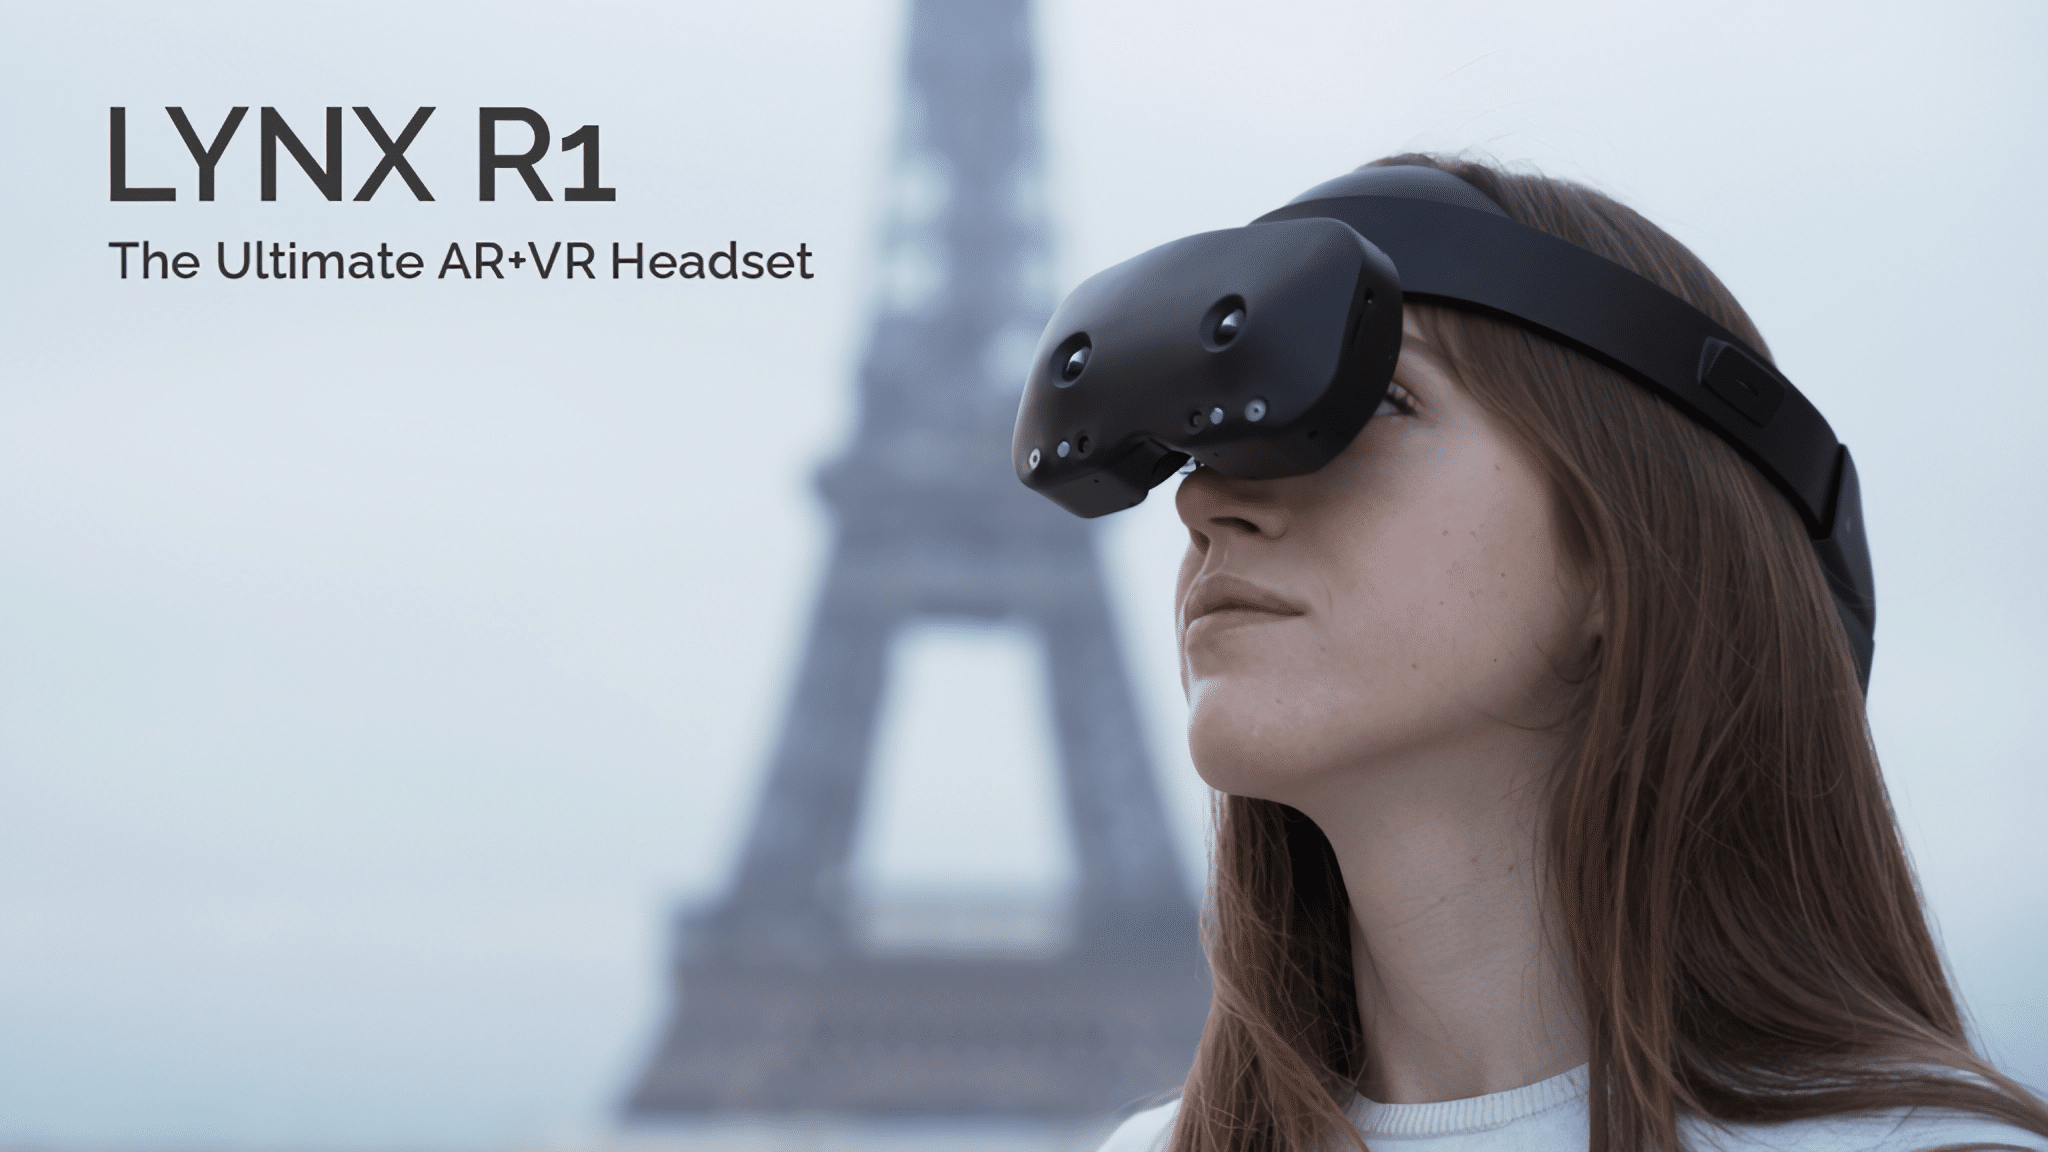 Rilis Headset AR & VR yang Dirumorkan dan Dikonfirmasi – 2022 Dan Selanjutnya: Apple, PSVR 2 & Lebih Banyak Intelijen Data Blockchain. Pencarian Vertikal. Ai.